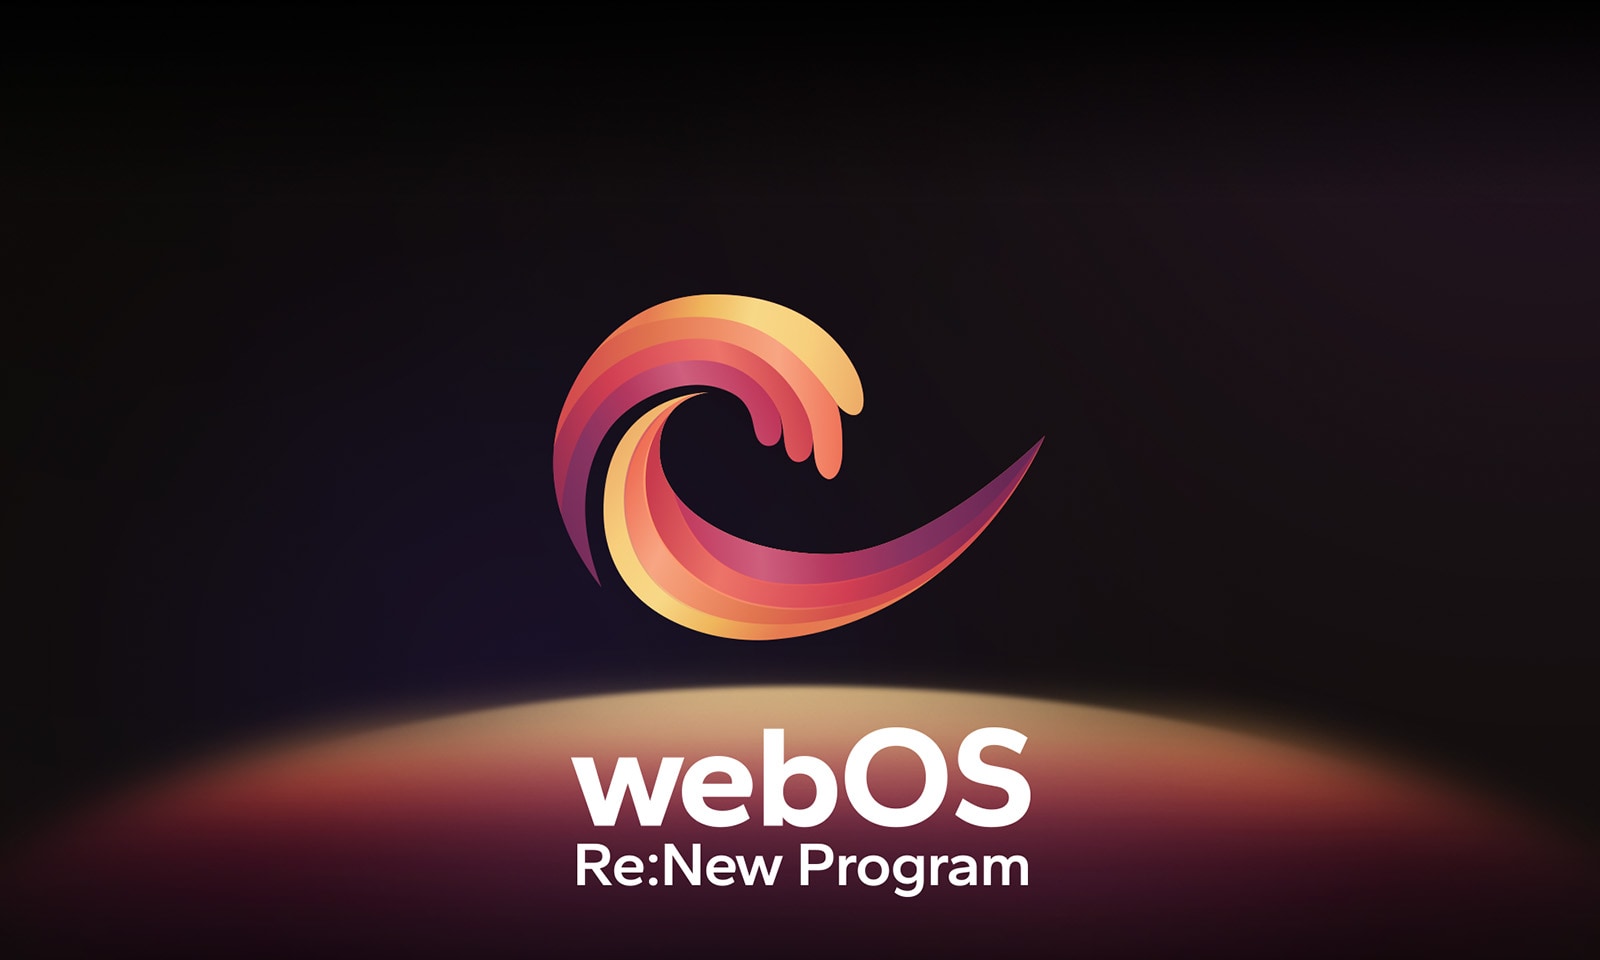 webOS Re:New Program 標誌背後有黑色的背景，帶有黃橘色，底部有紫色圓球。